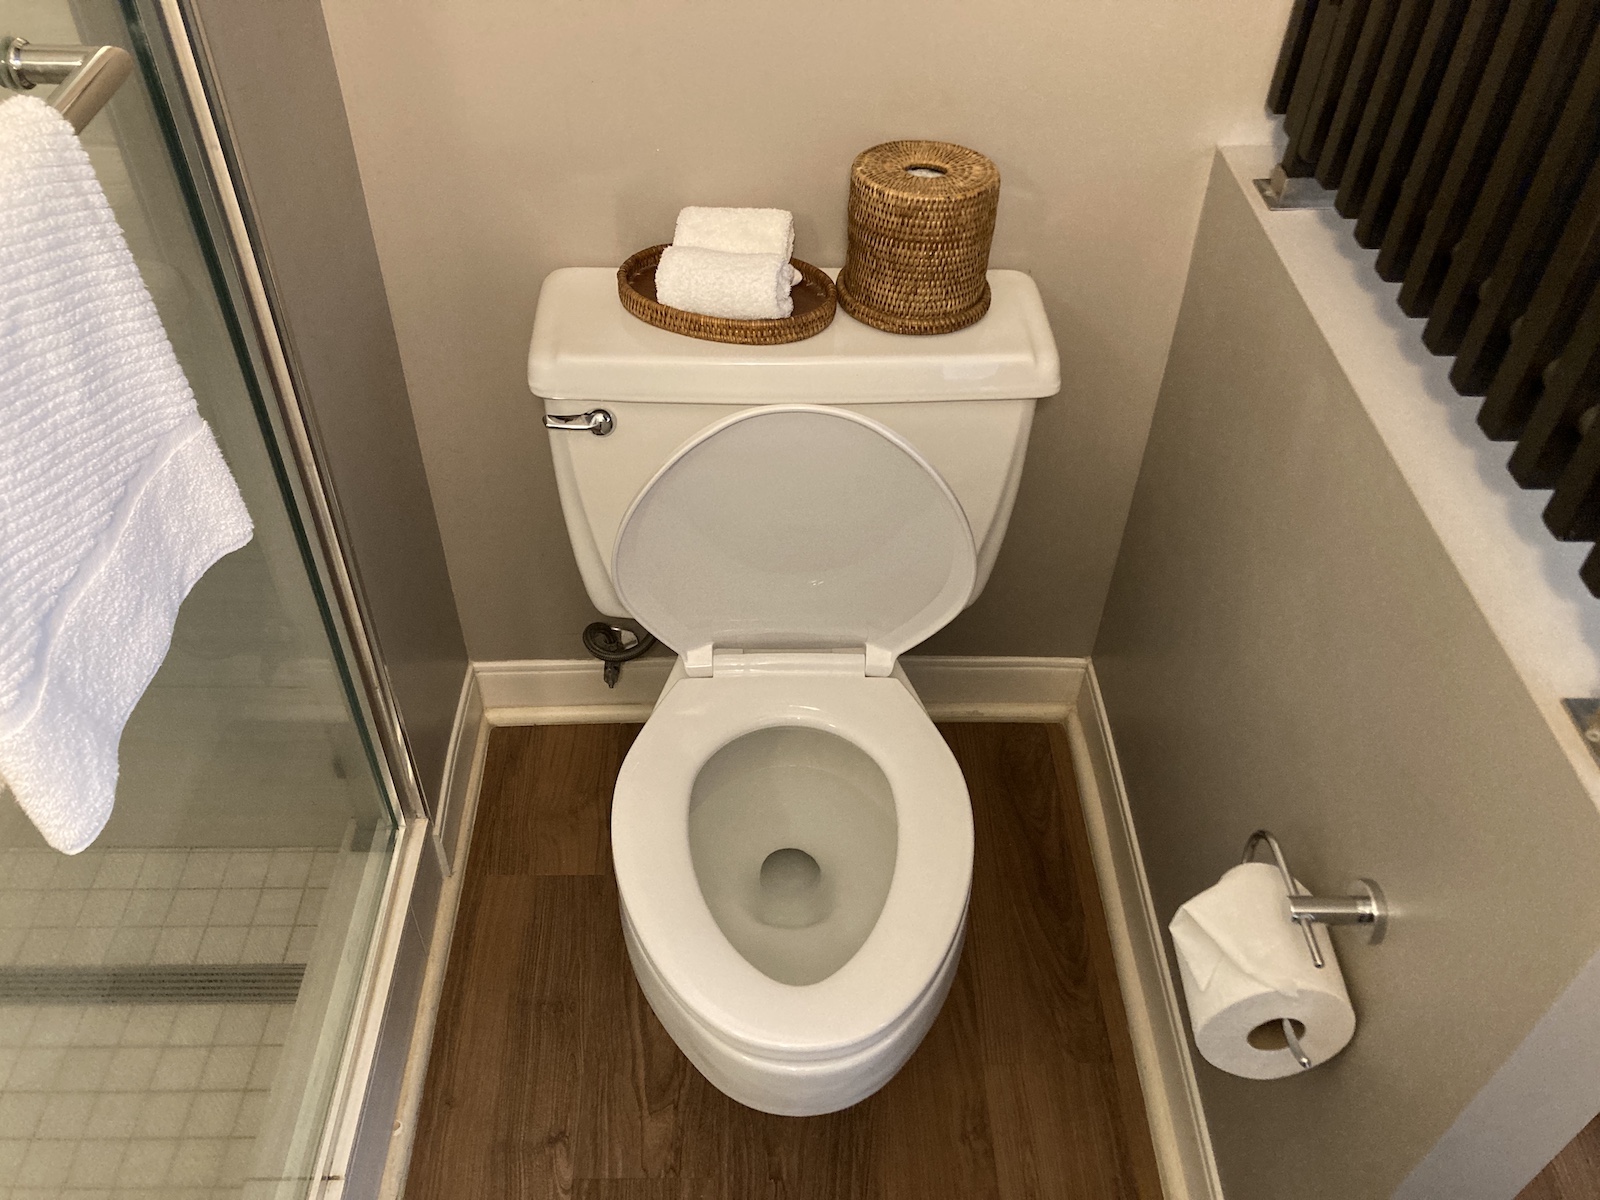 Photo of an open toilet